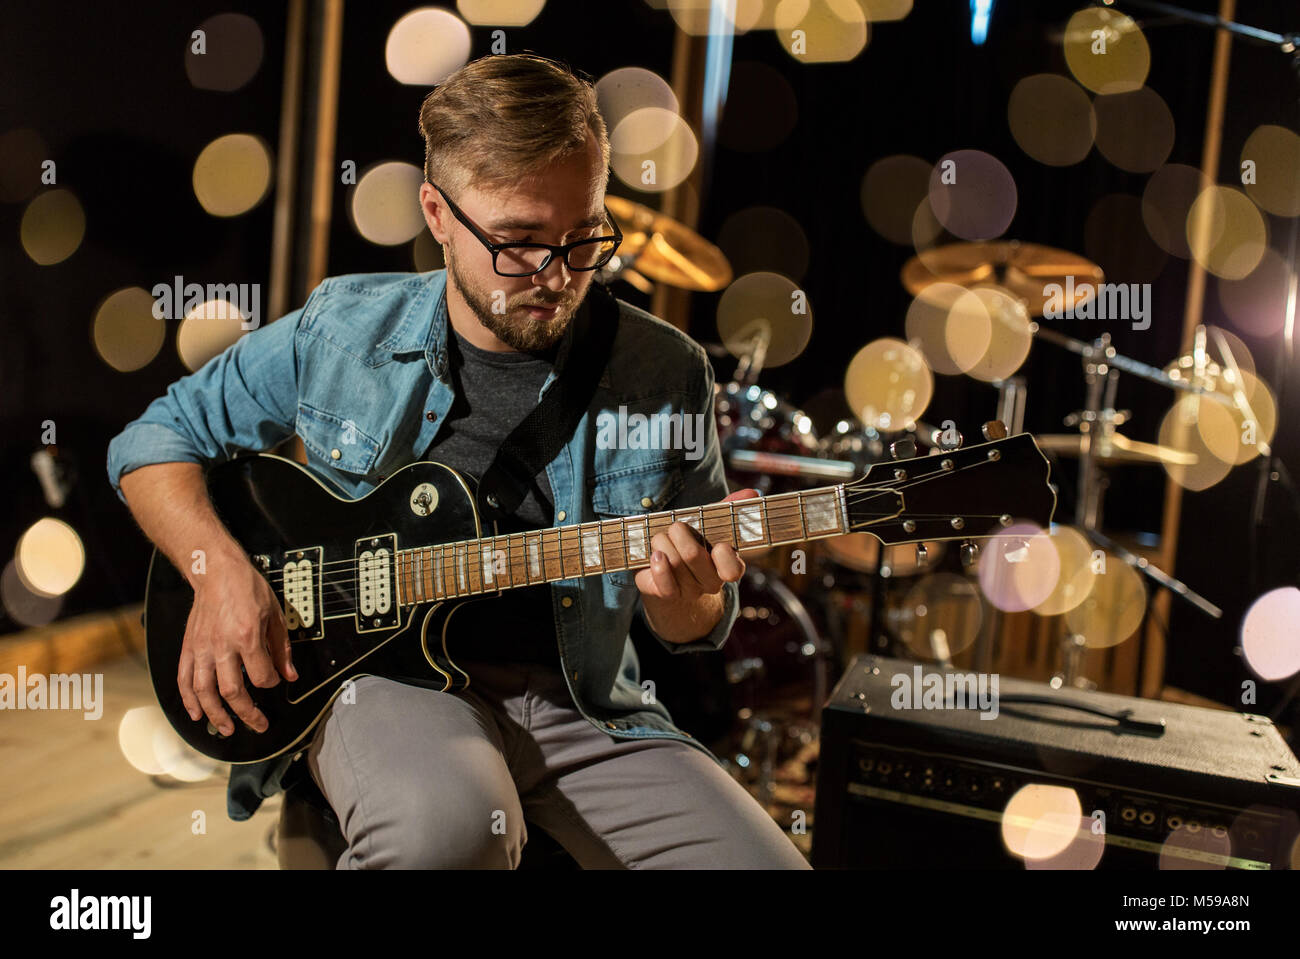 man playing guitar at studio rehearsal Stock Photo